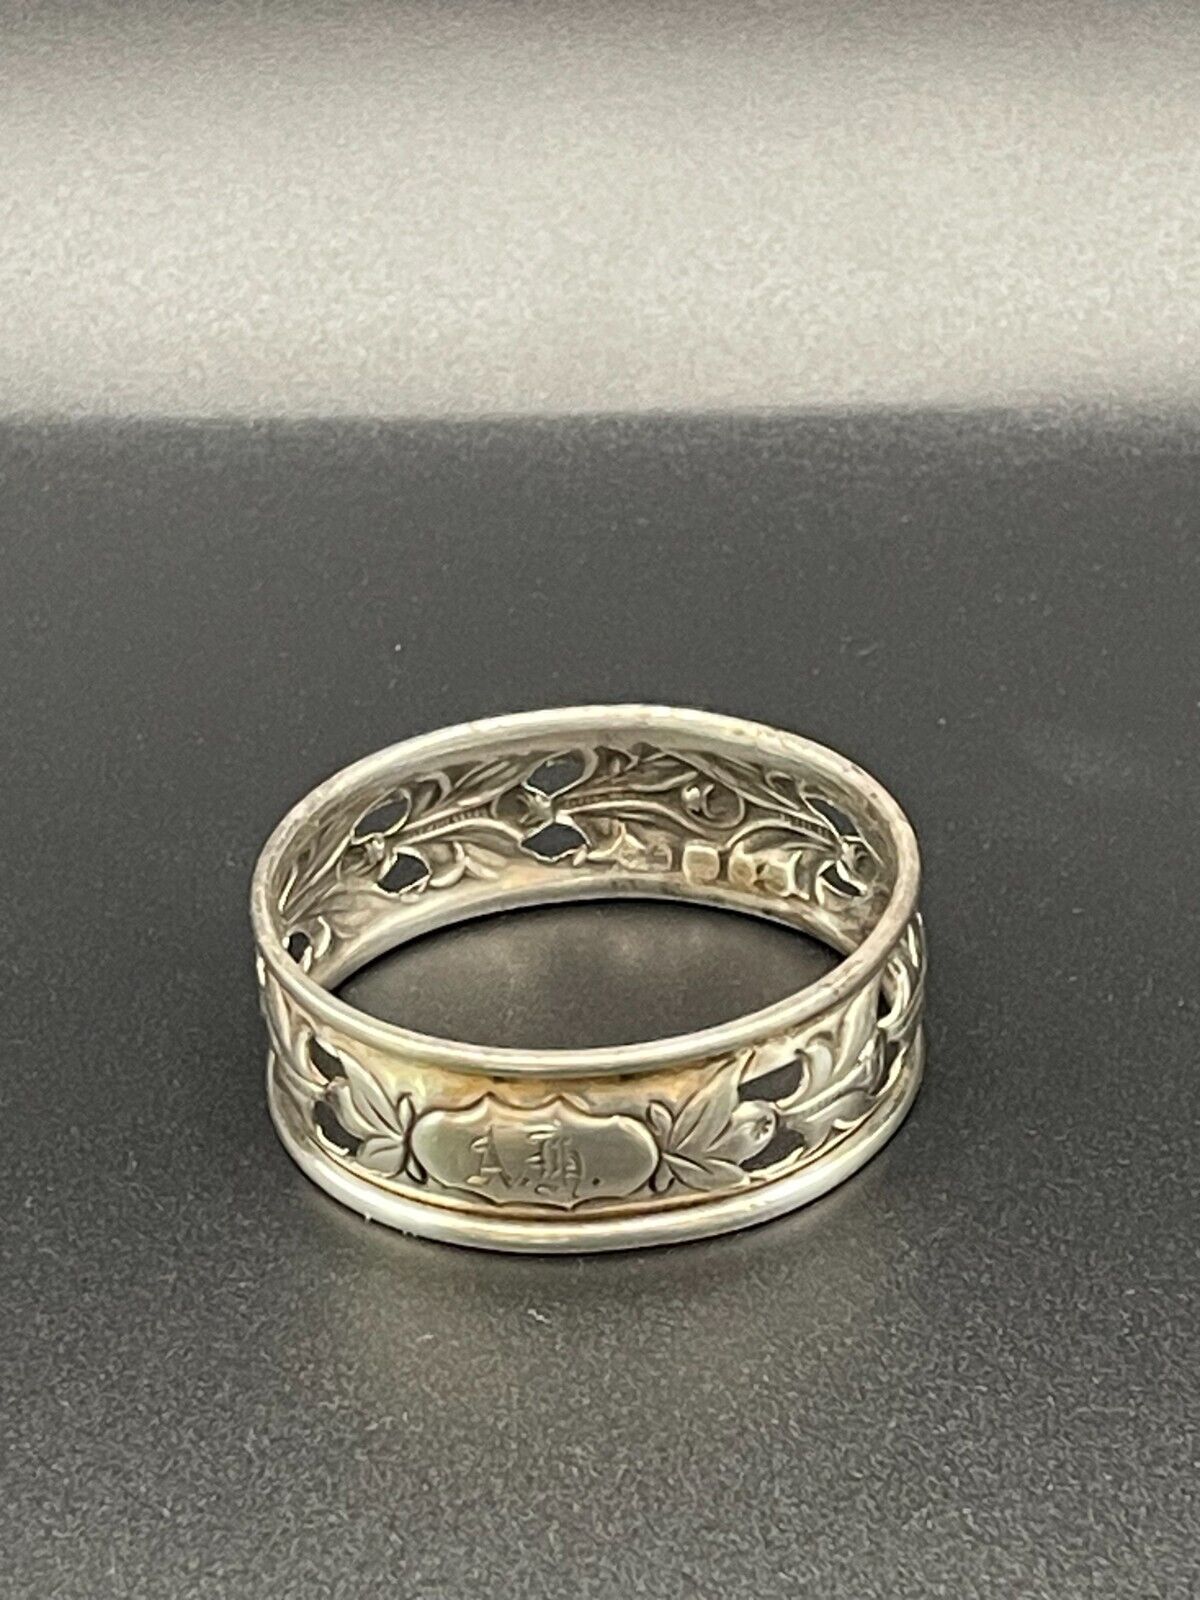 Antique Monogrammed Sterling Silver Napkin Ring - Birmingham 1899